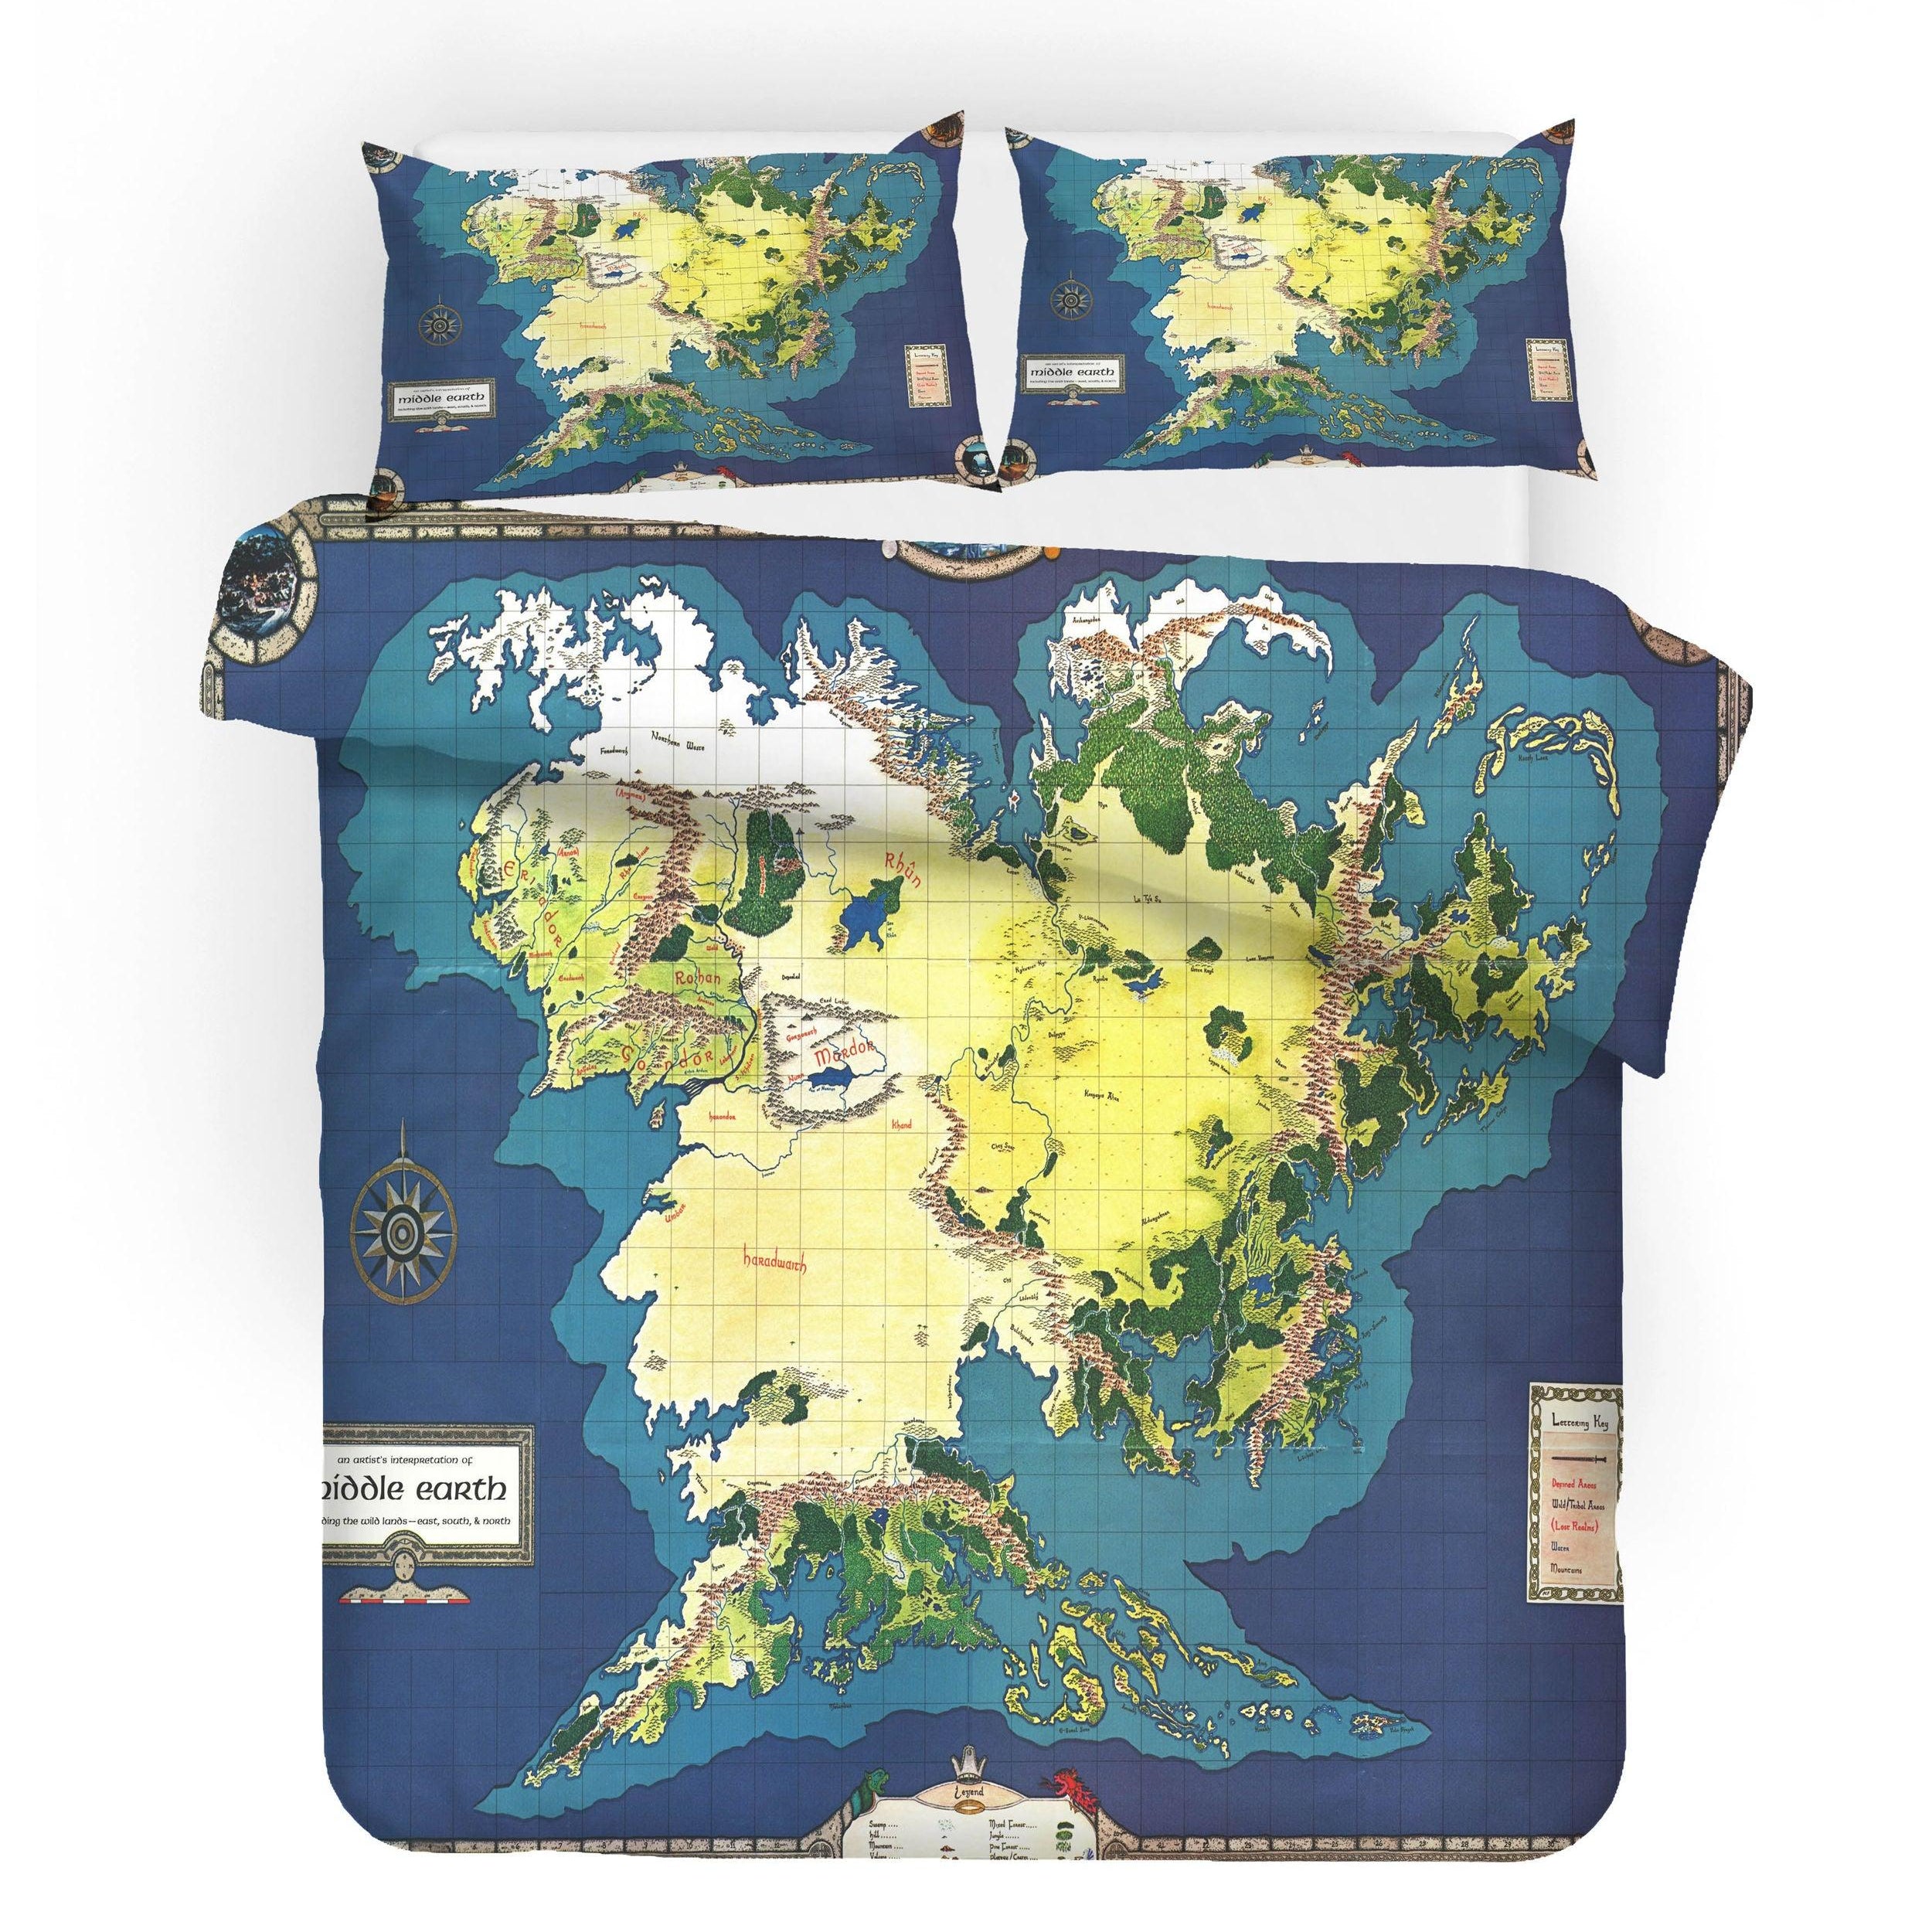 3D Retro World Map Quilt Cover Set Bedding Set Pillowcases 35- Jess Art Decoration